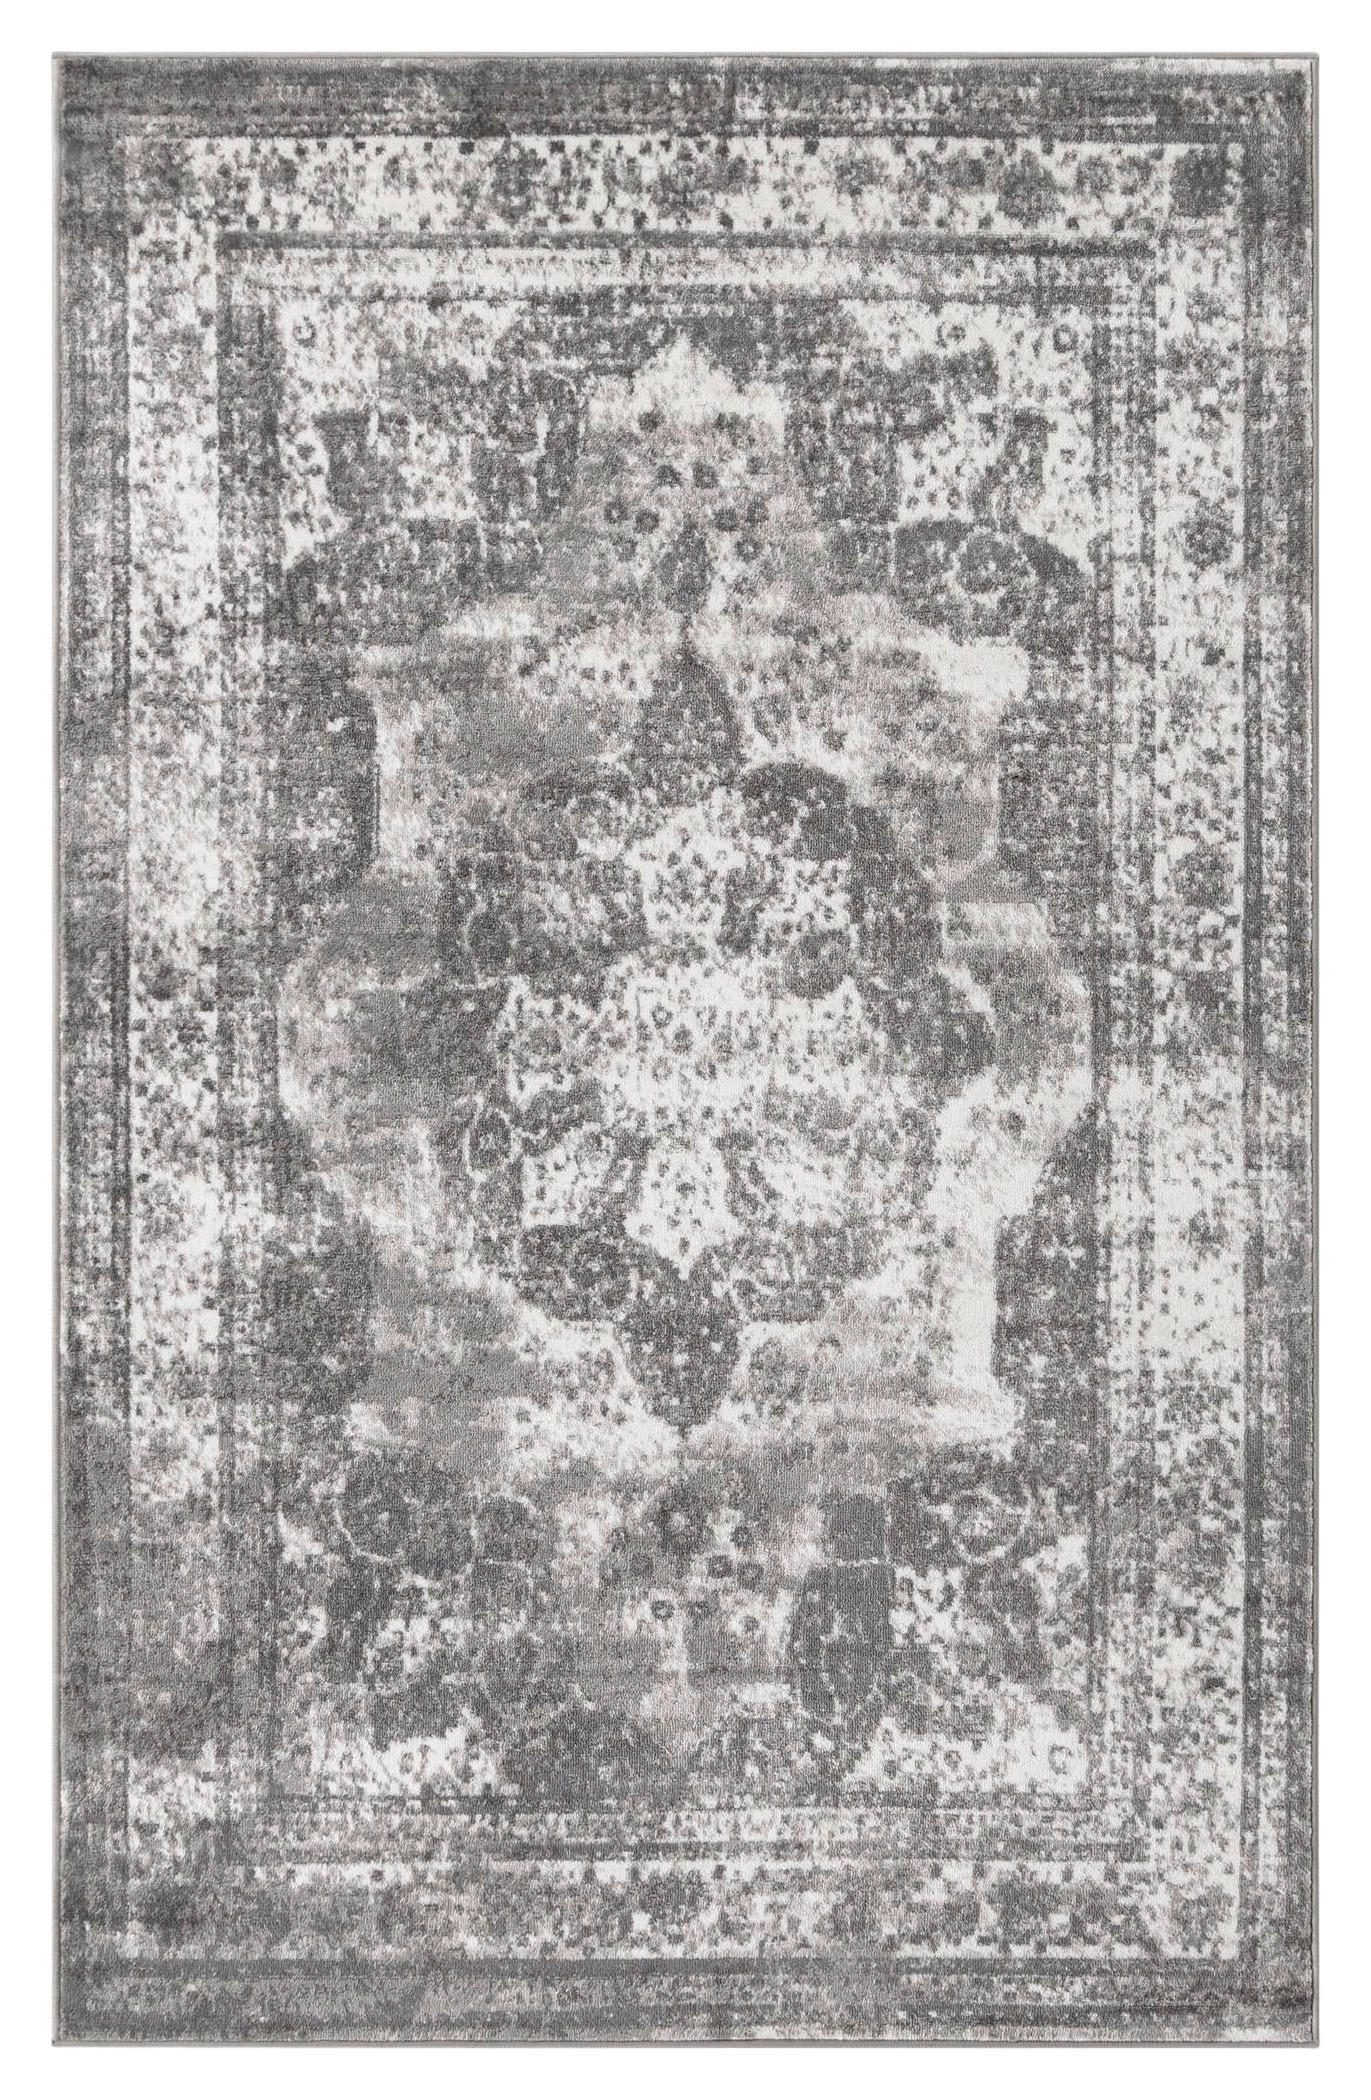 WEBTEPPICH  150/245 cm  Grau   - Grau, Basics, Textil (150/245cm)